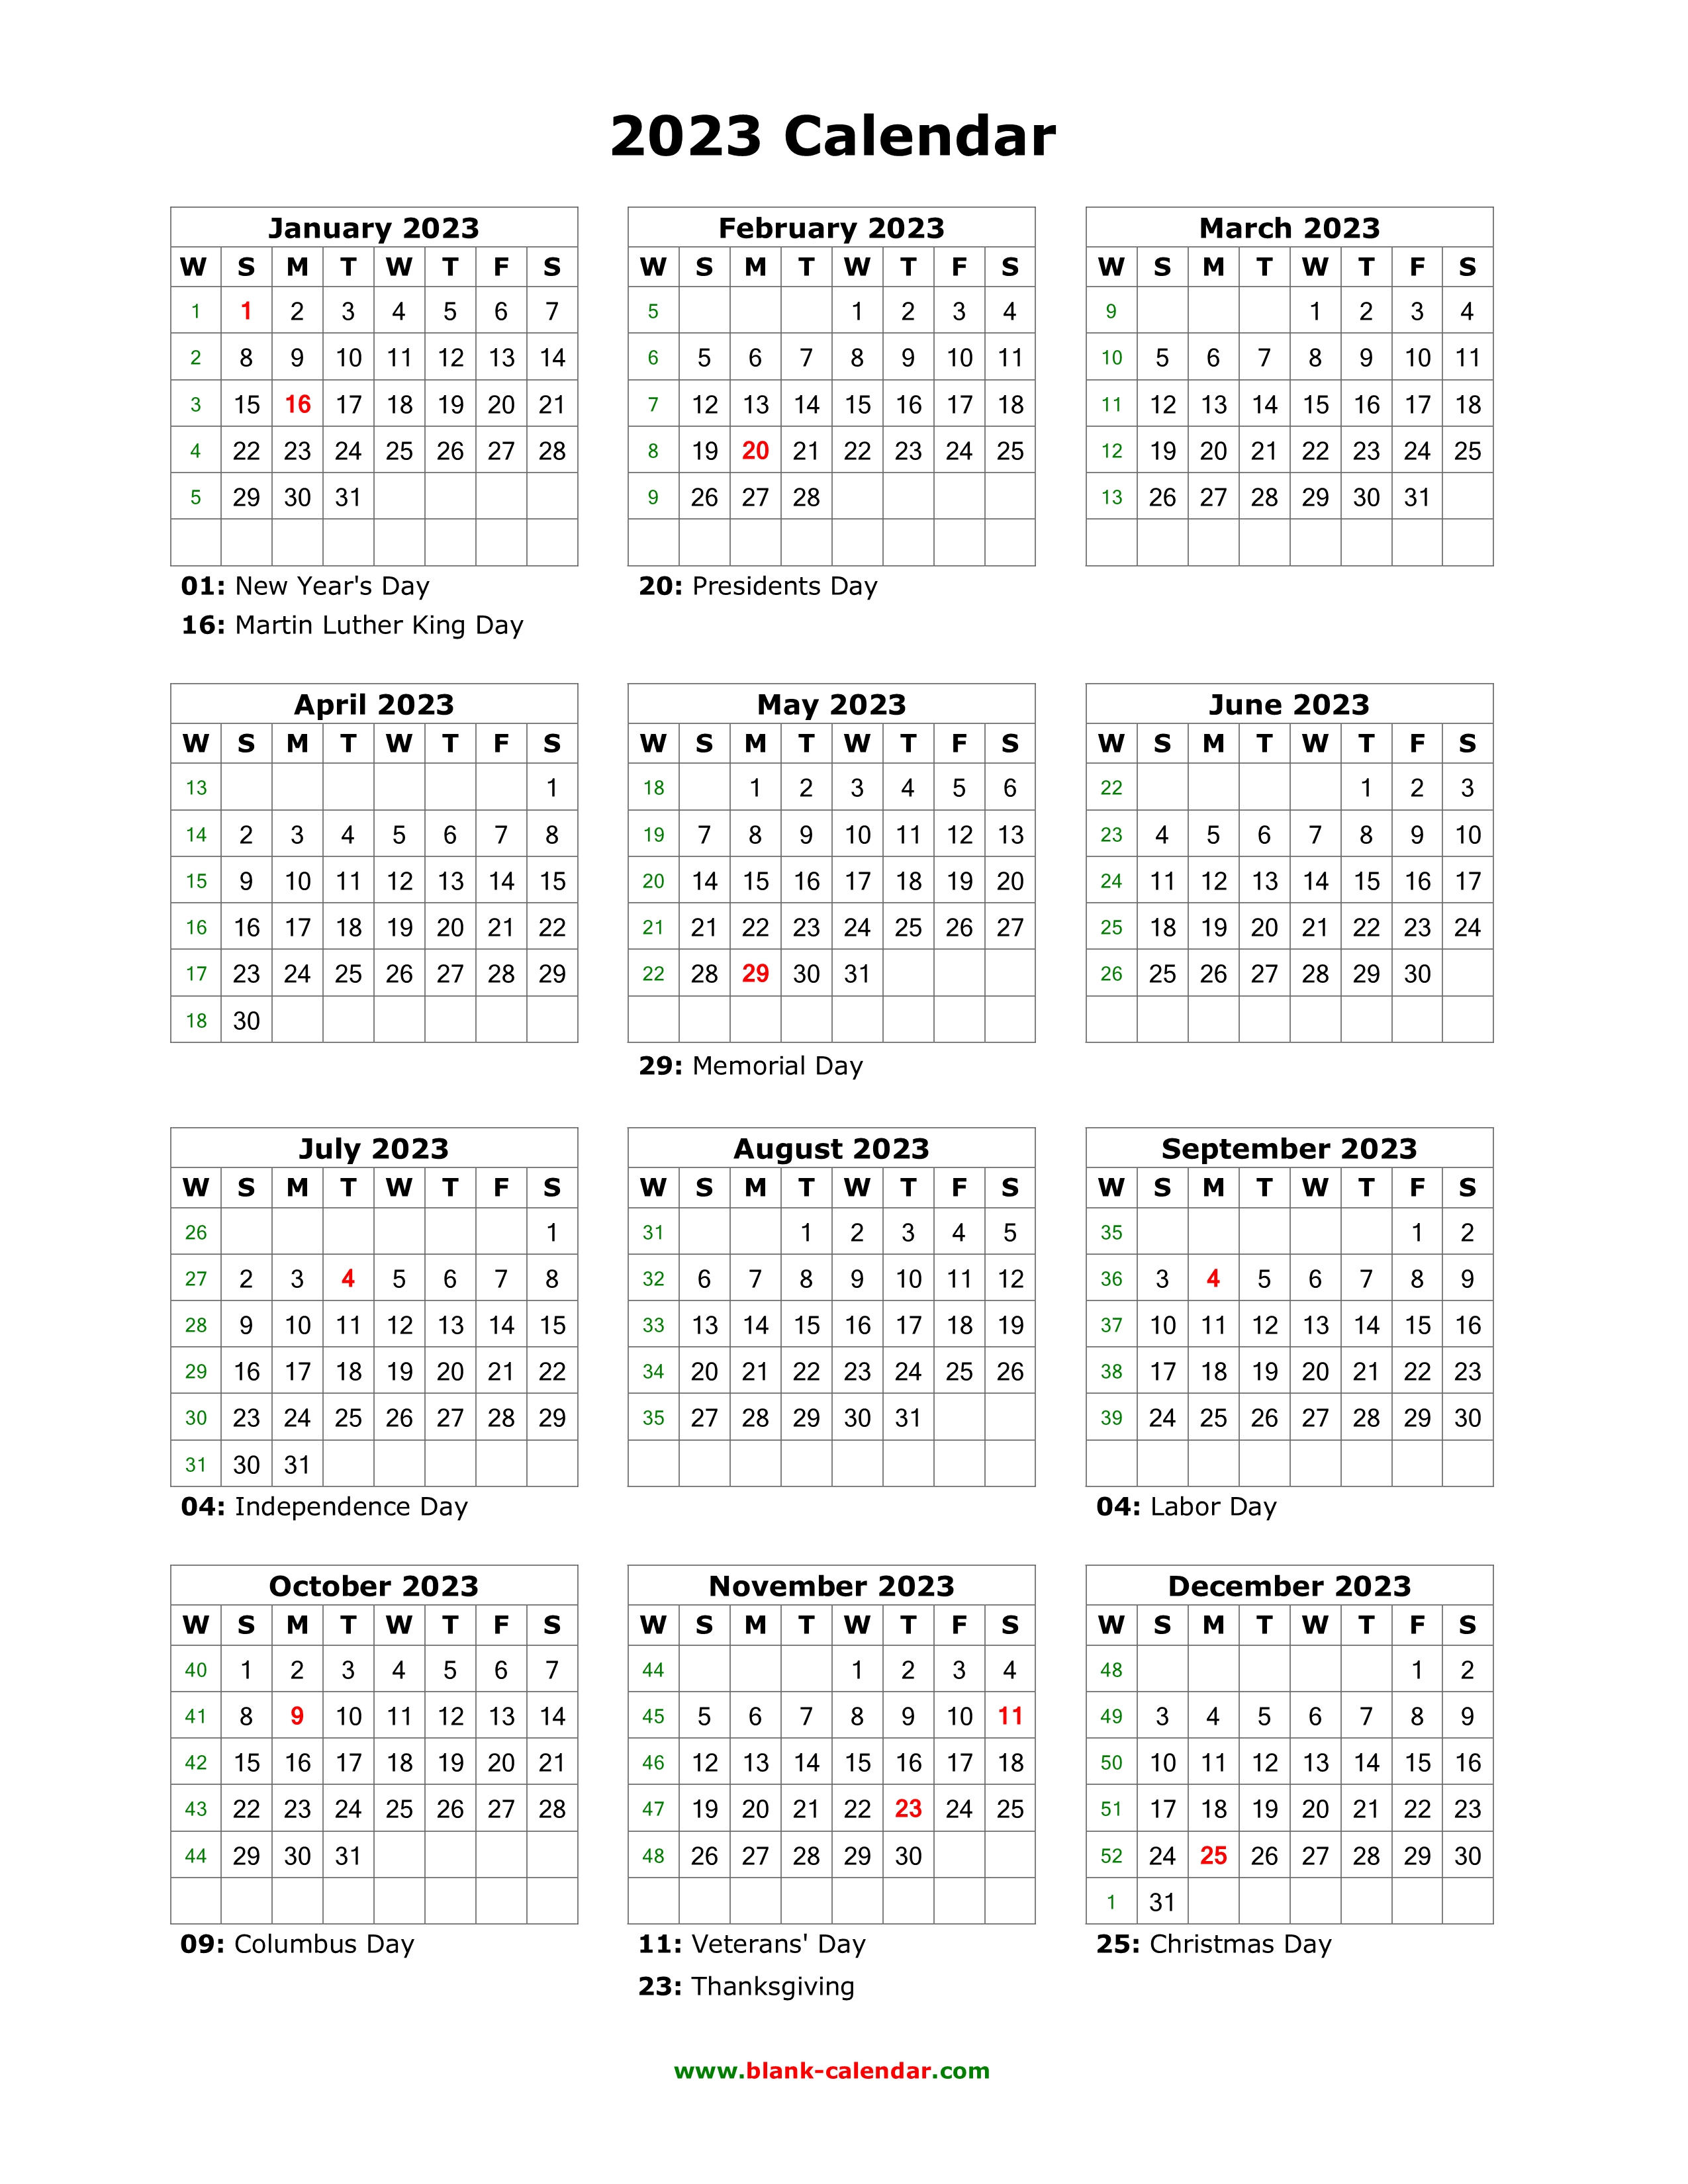 ksu-holiday-calendar-2023-printable-calendar-2023